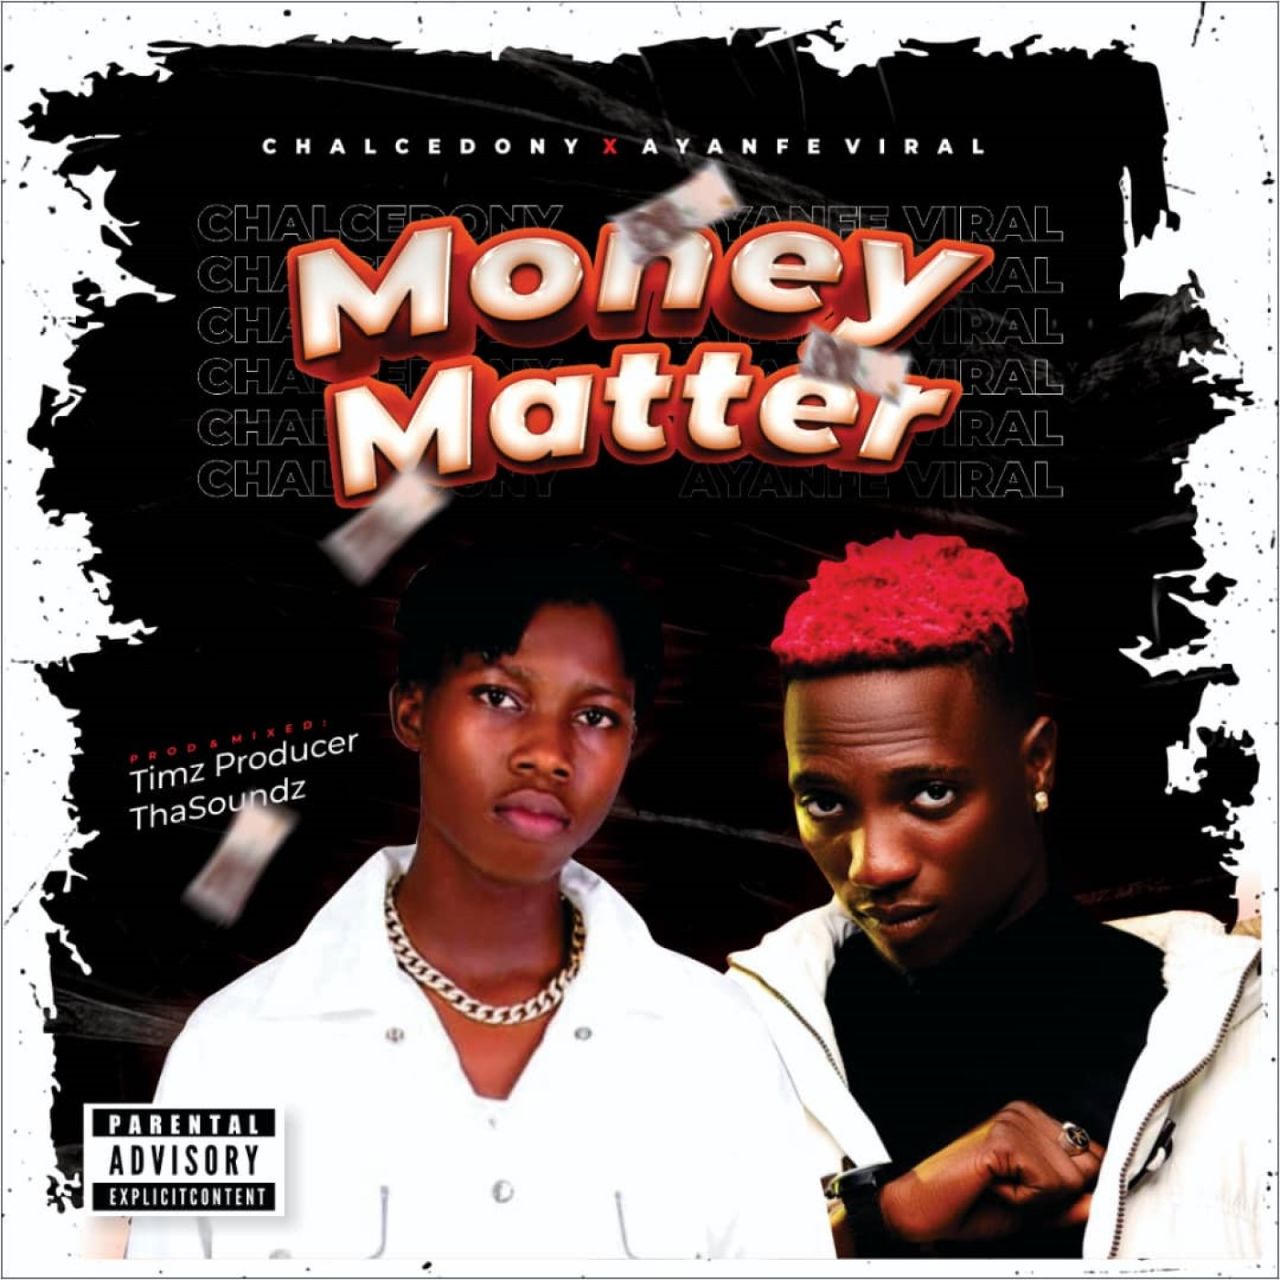 Chalcedony – Money Matter feat. Ayanfe Viral